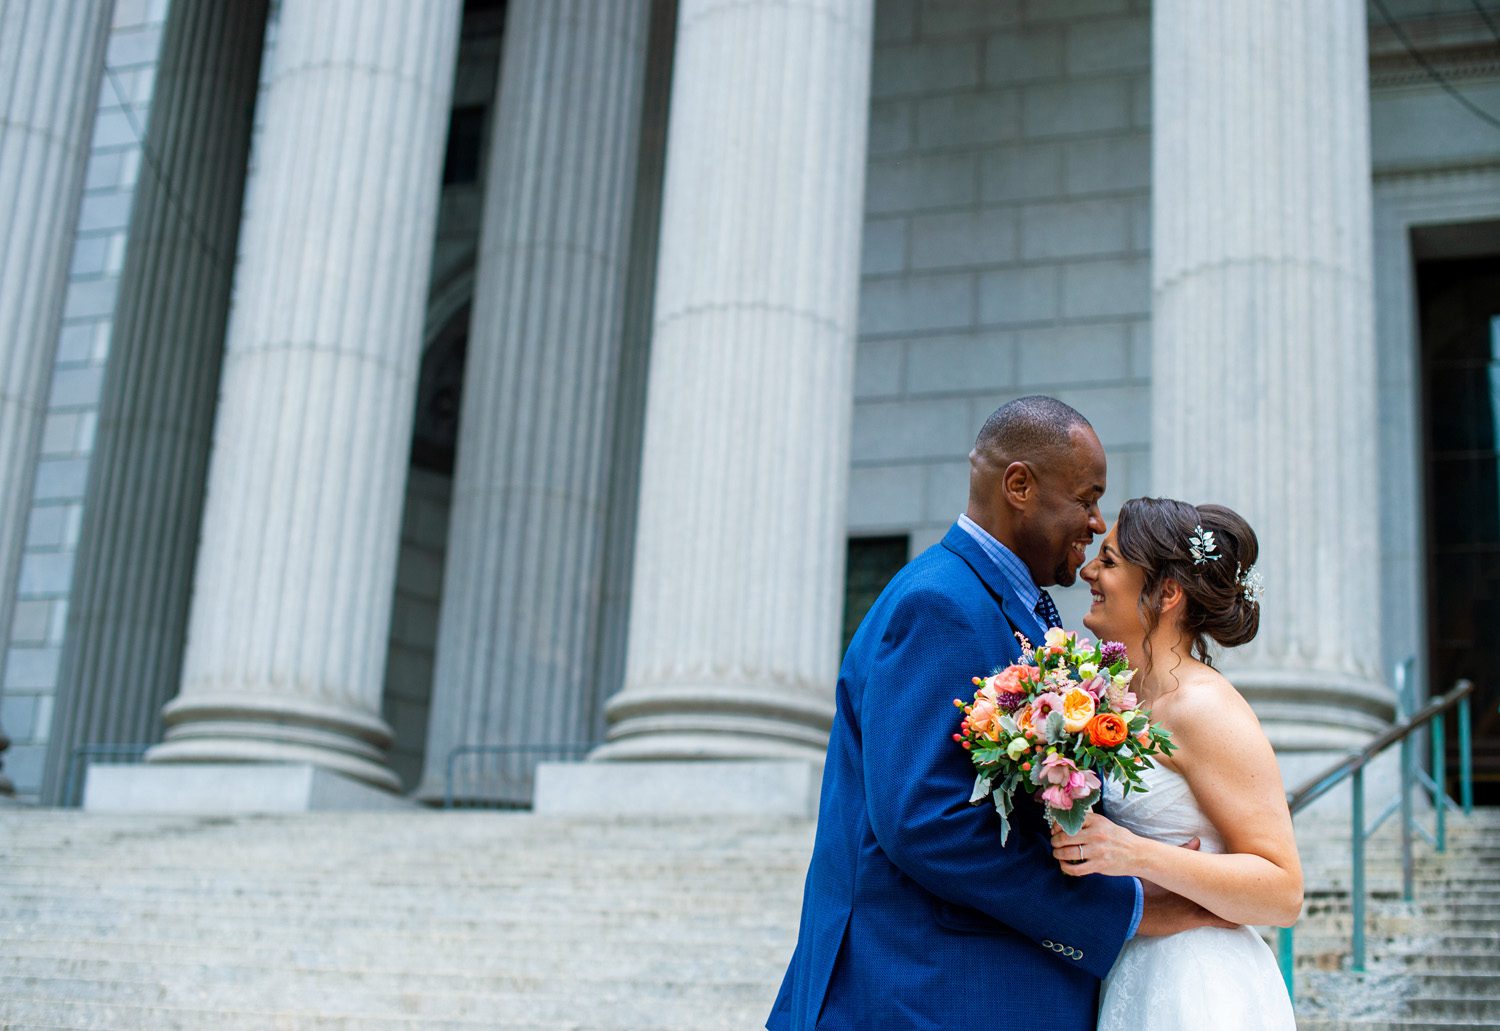 Courthouse Steps Wedding Photos